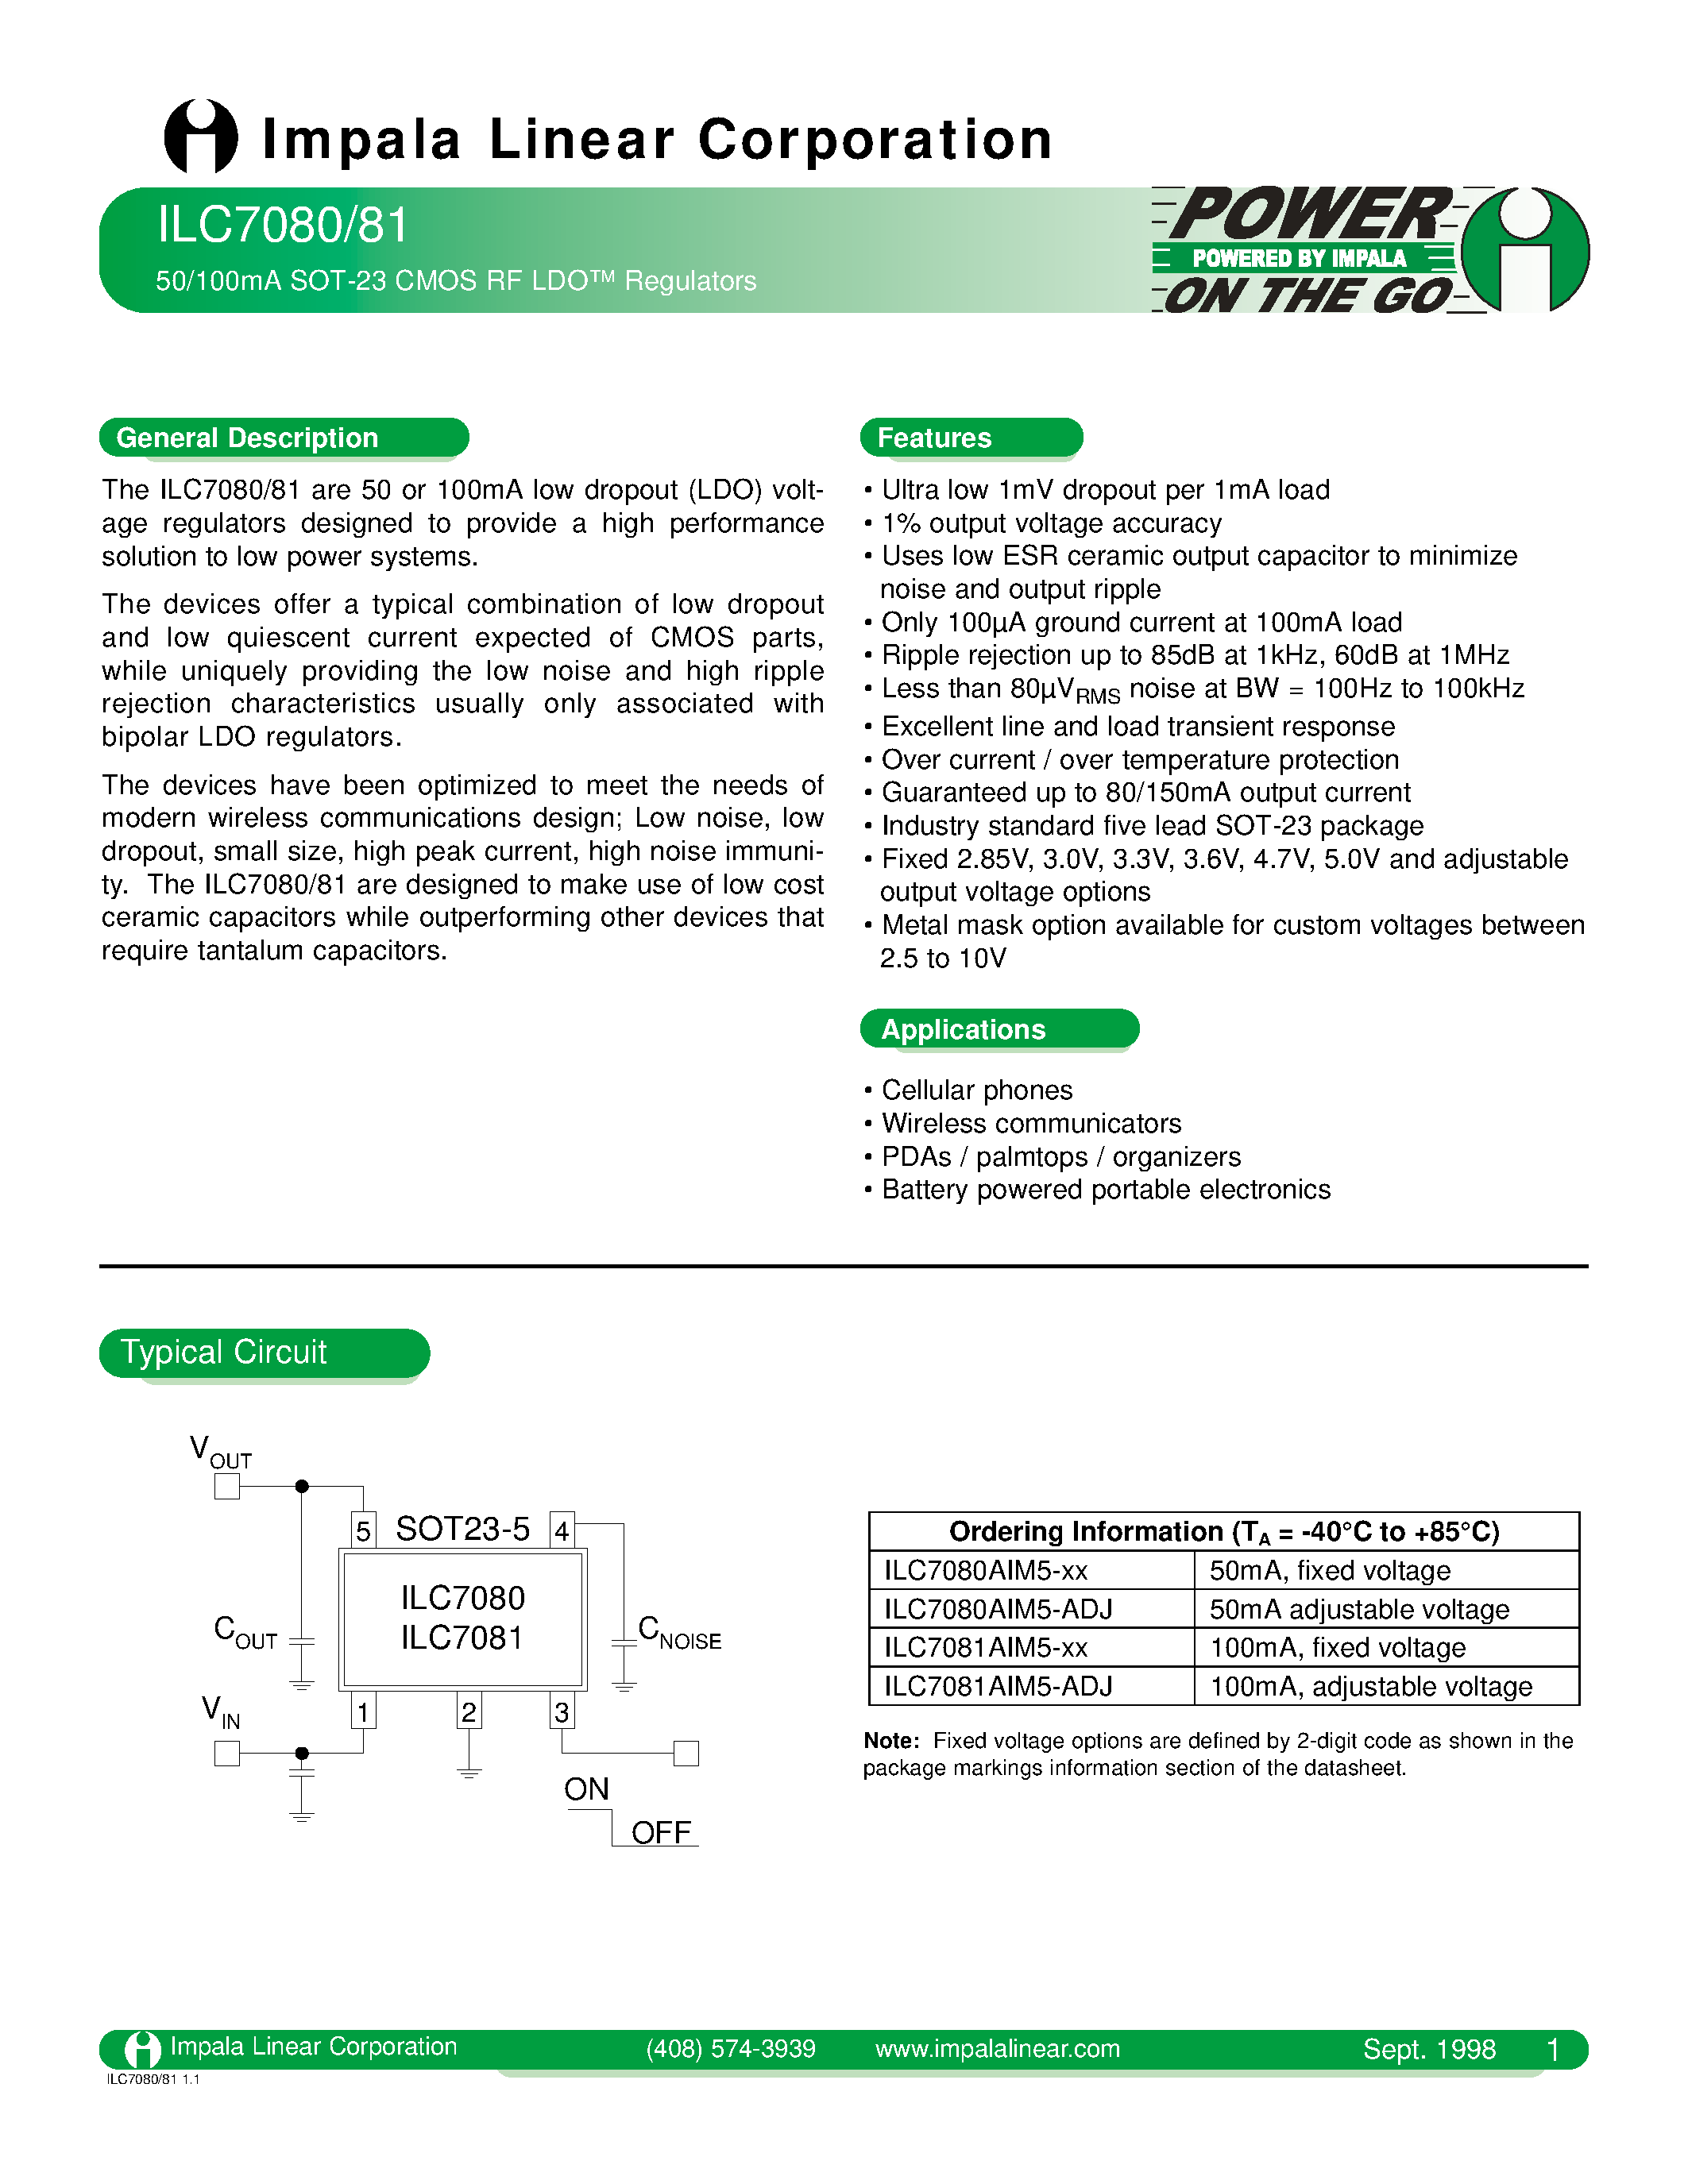 Datasheet ILC7081AIM5ADJX - 50/100M SOT-23 CMOS RF LDO REGULATORS page 1